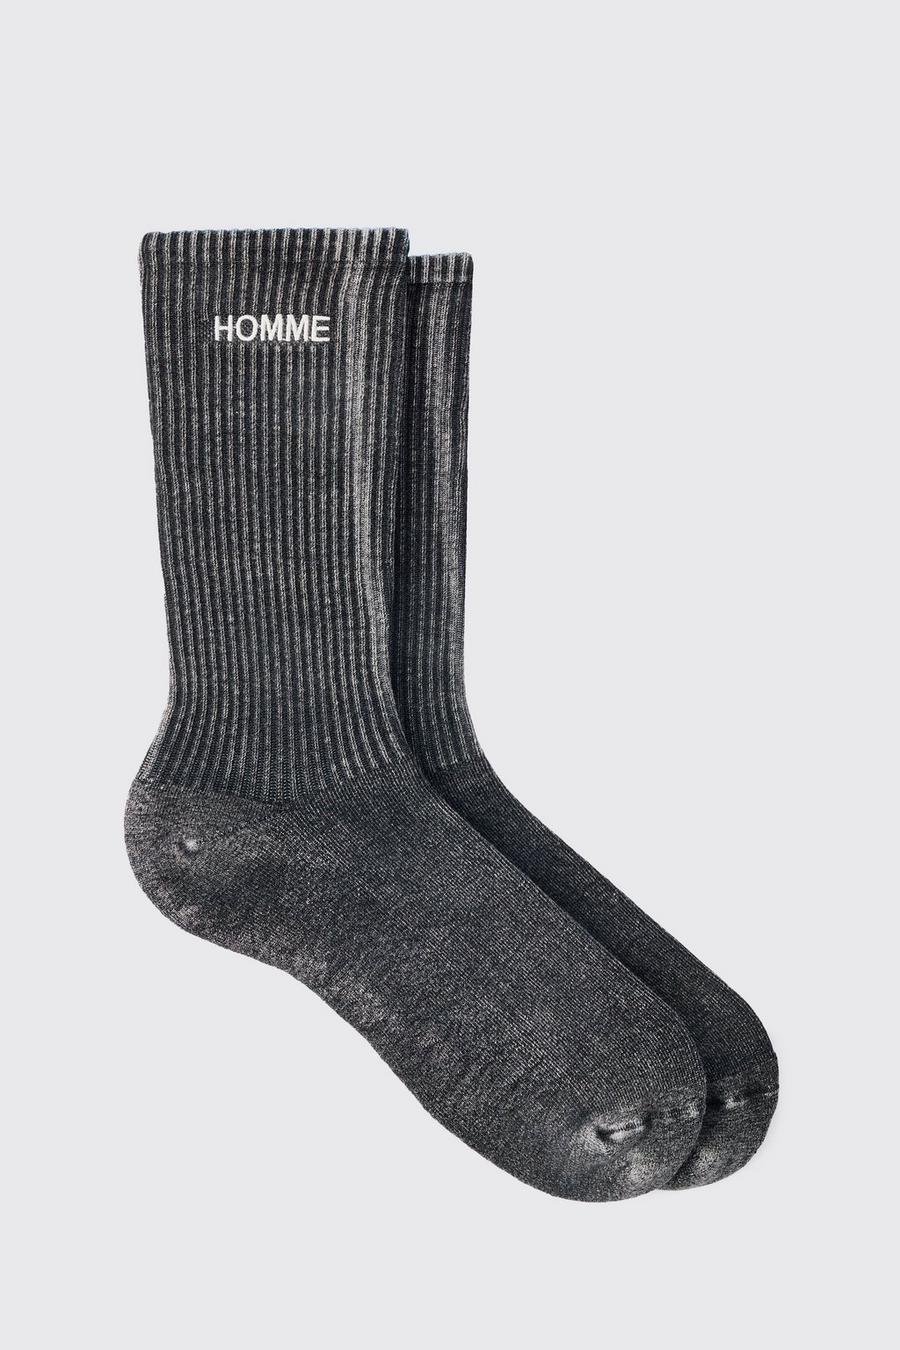 Homme Overdyed Grey Socks image number 1